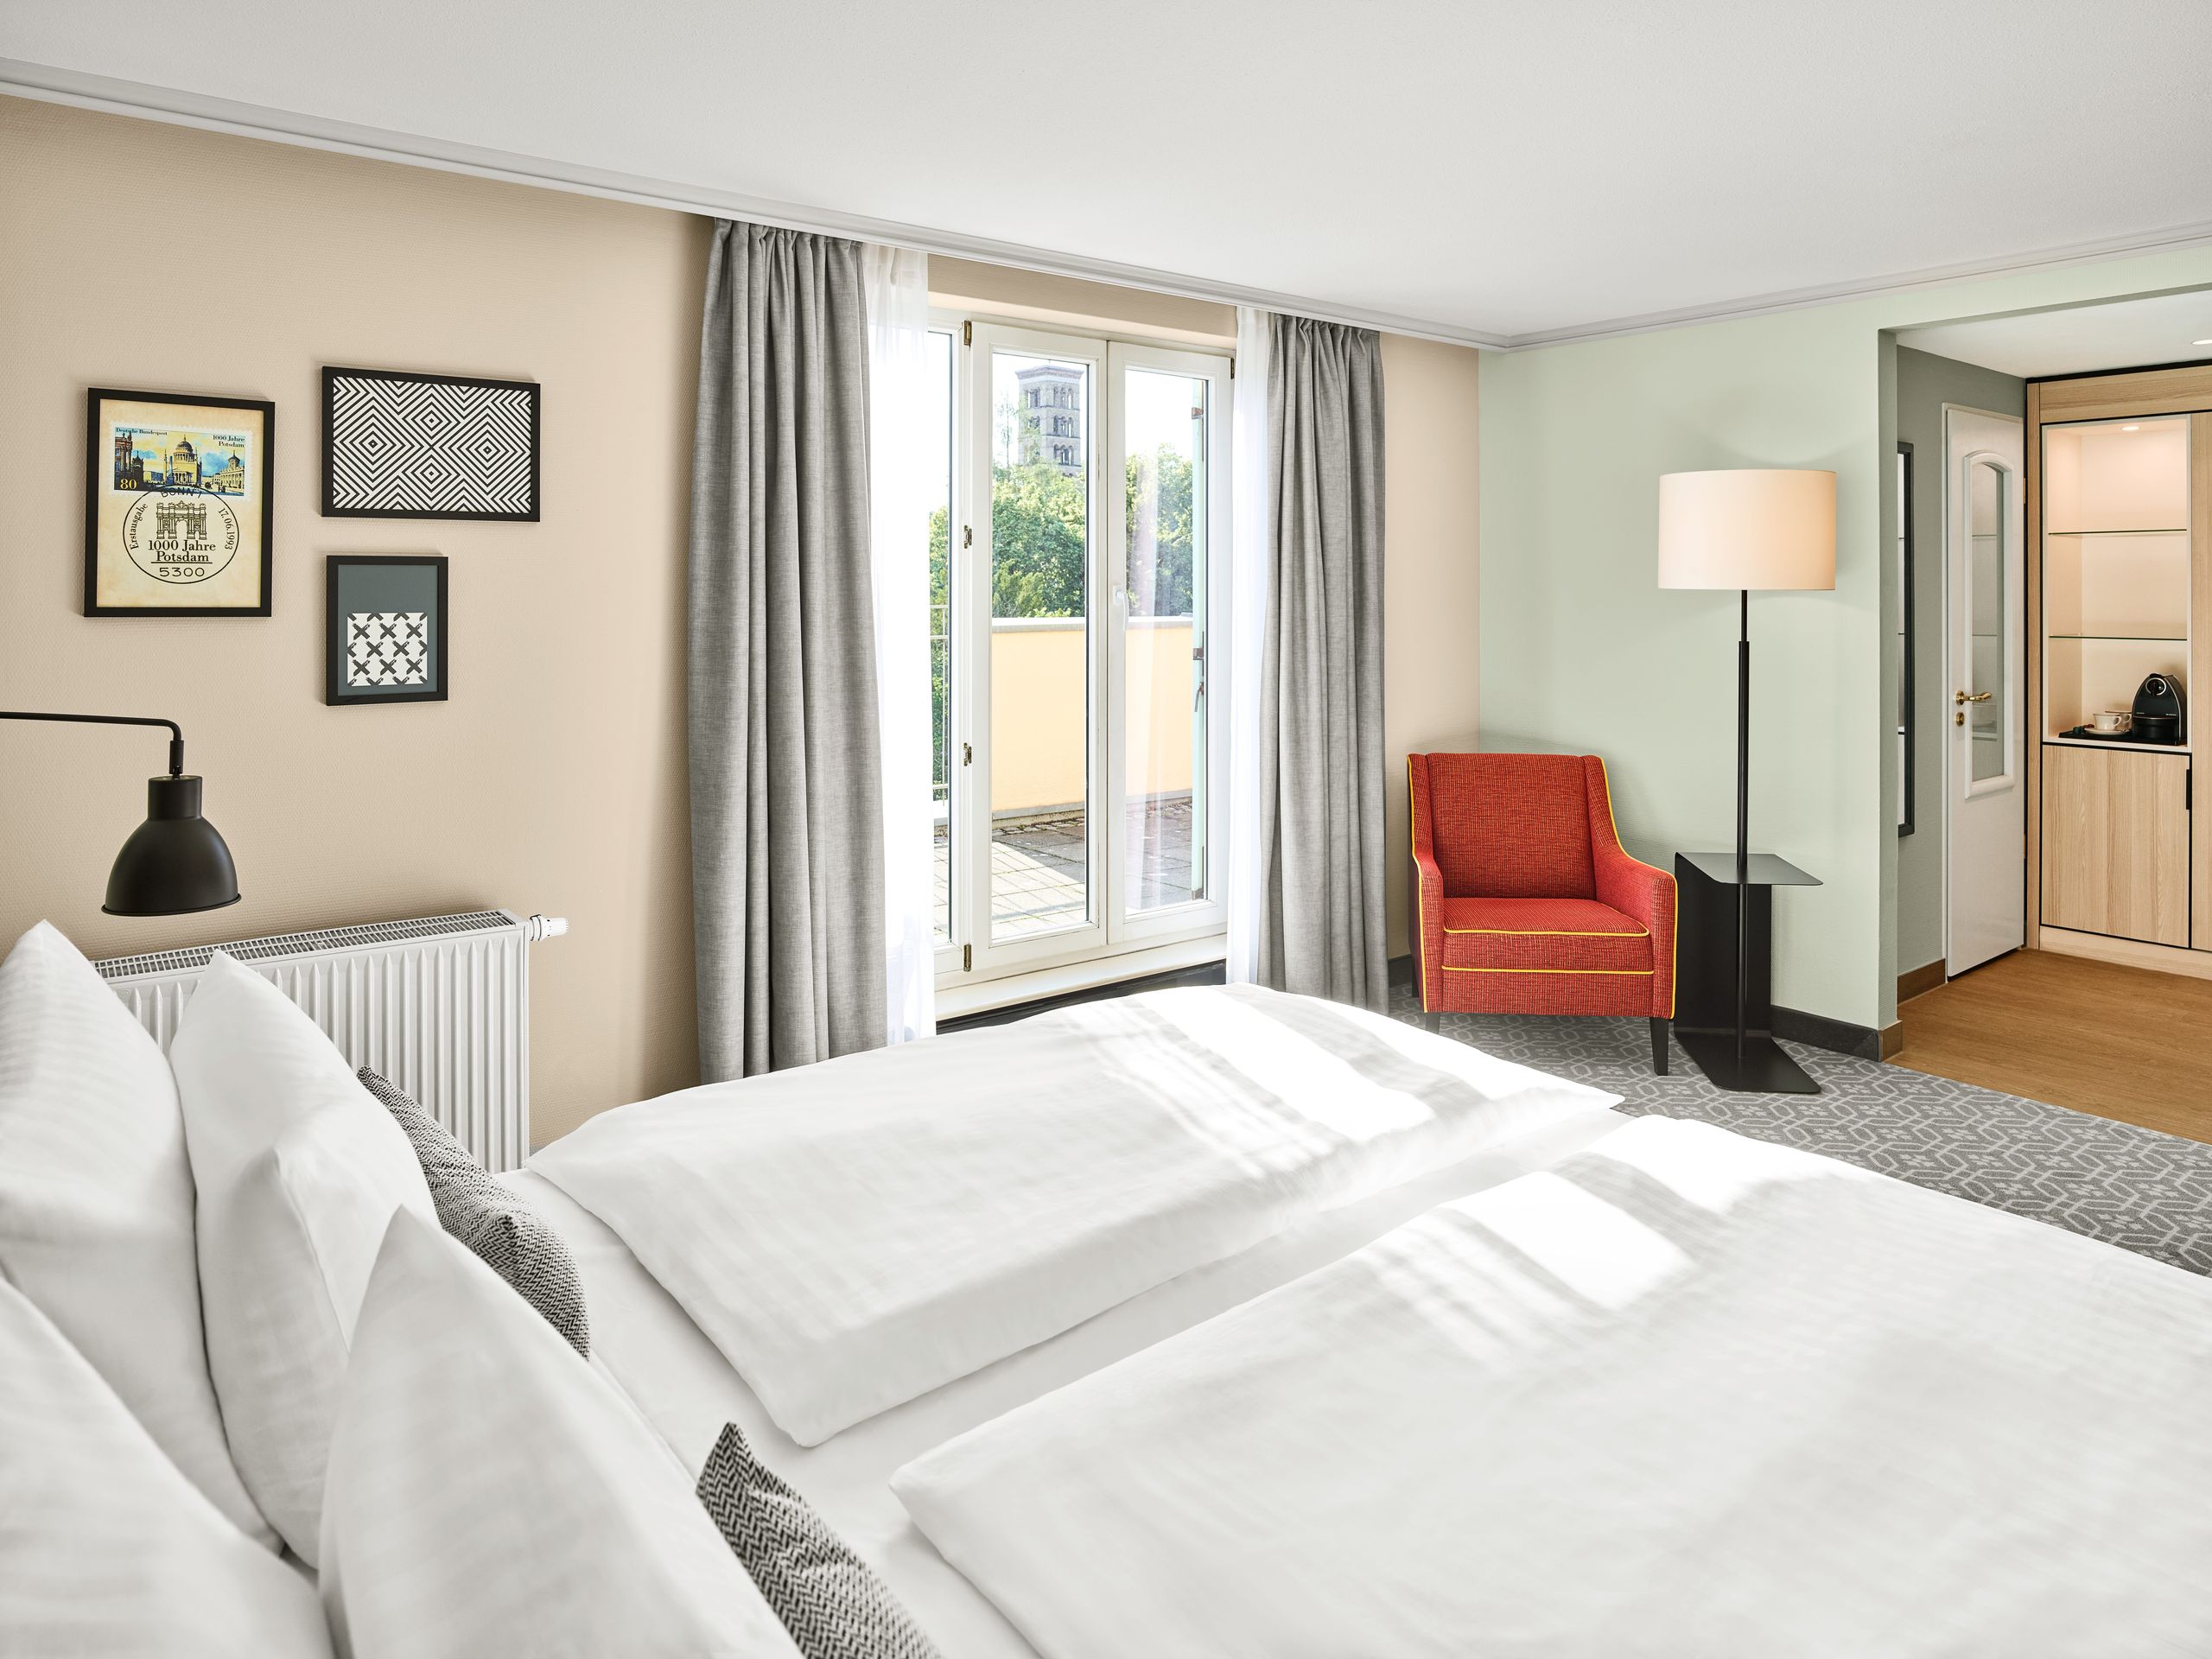 MAXX Hotel Sanssouci Potsdam - Tyskland - Deluxe-rum